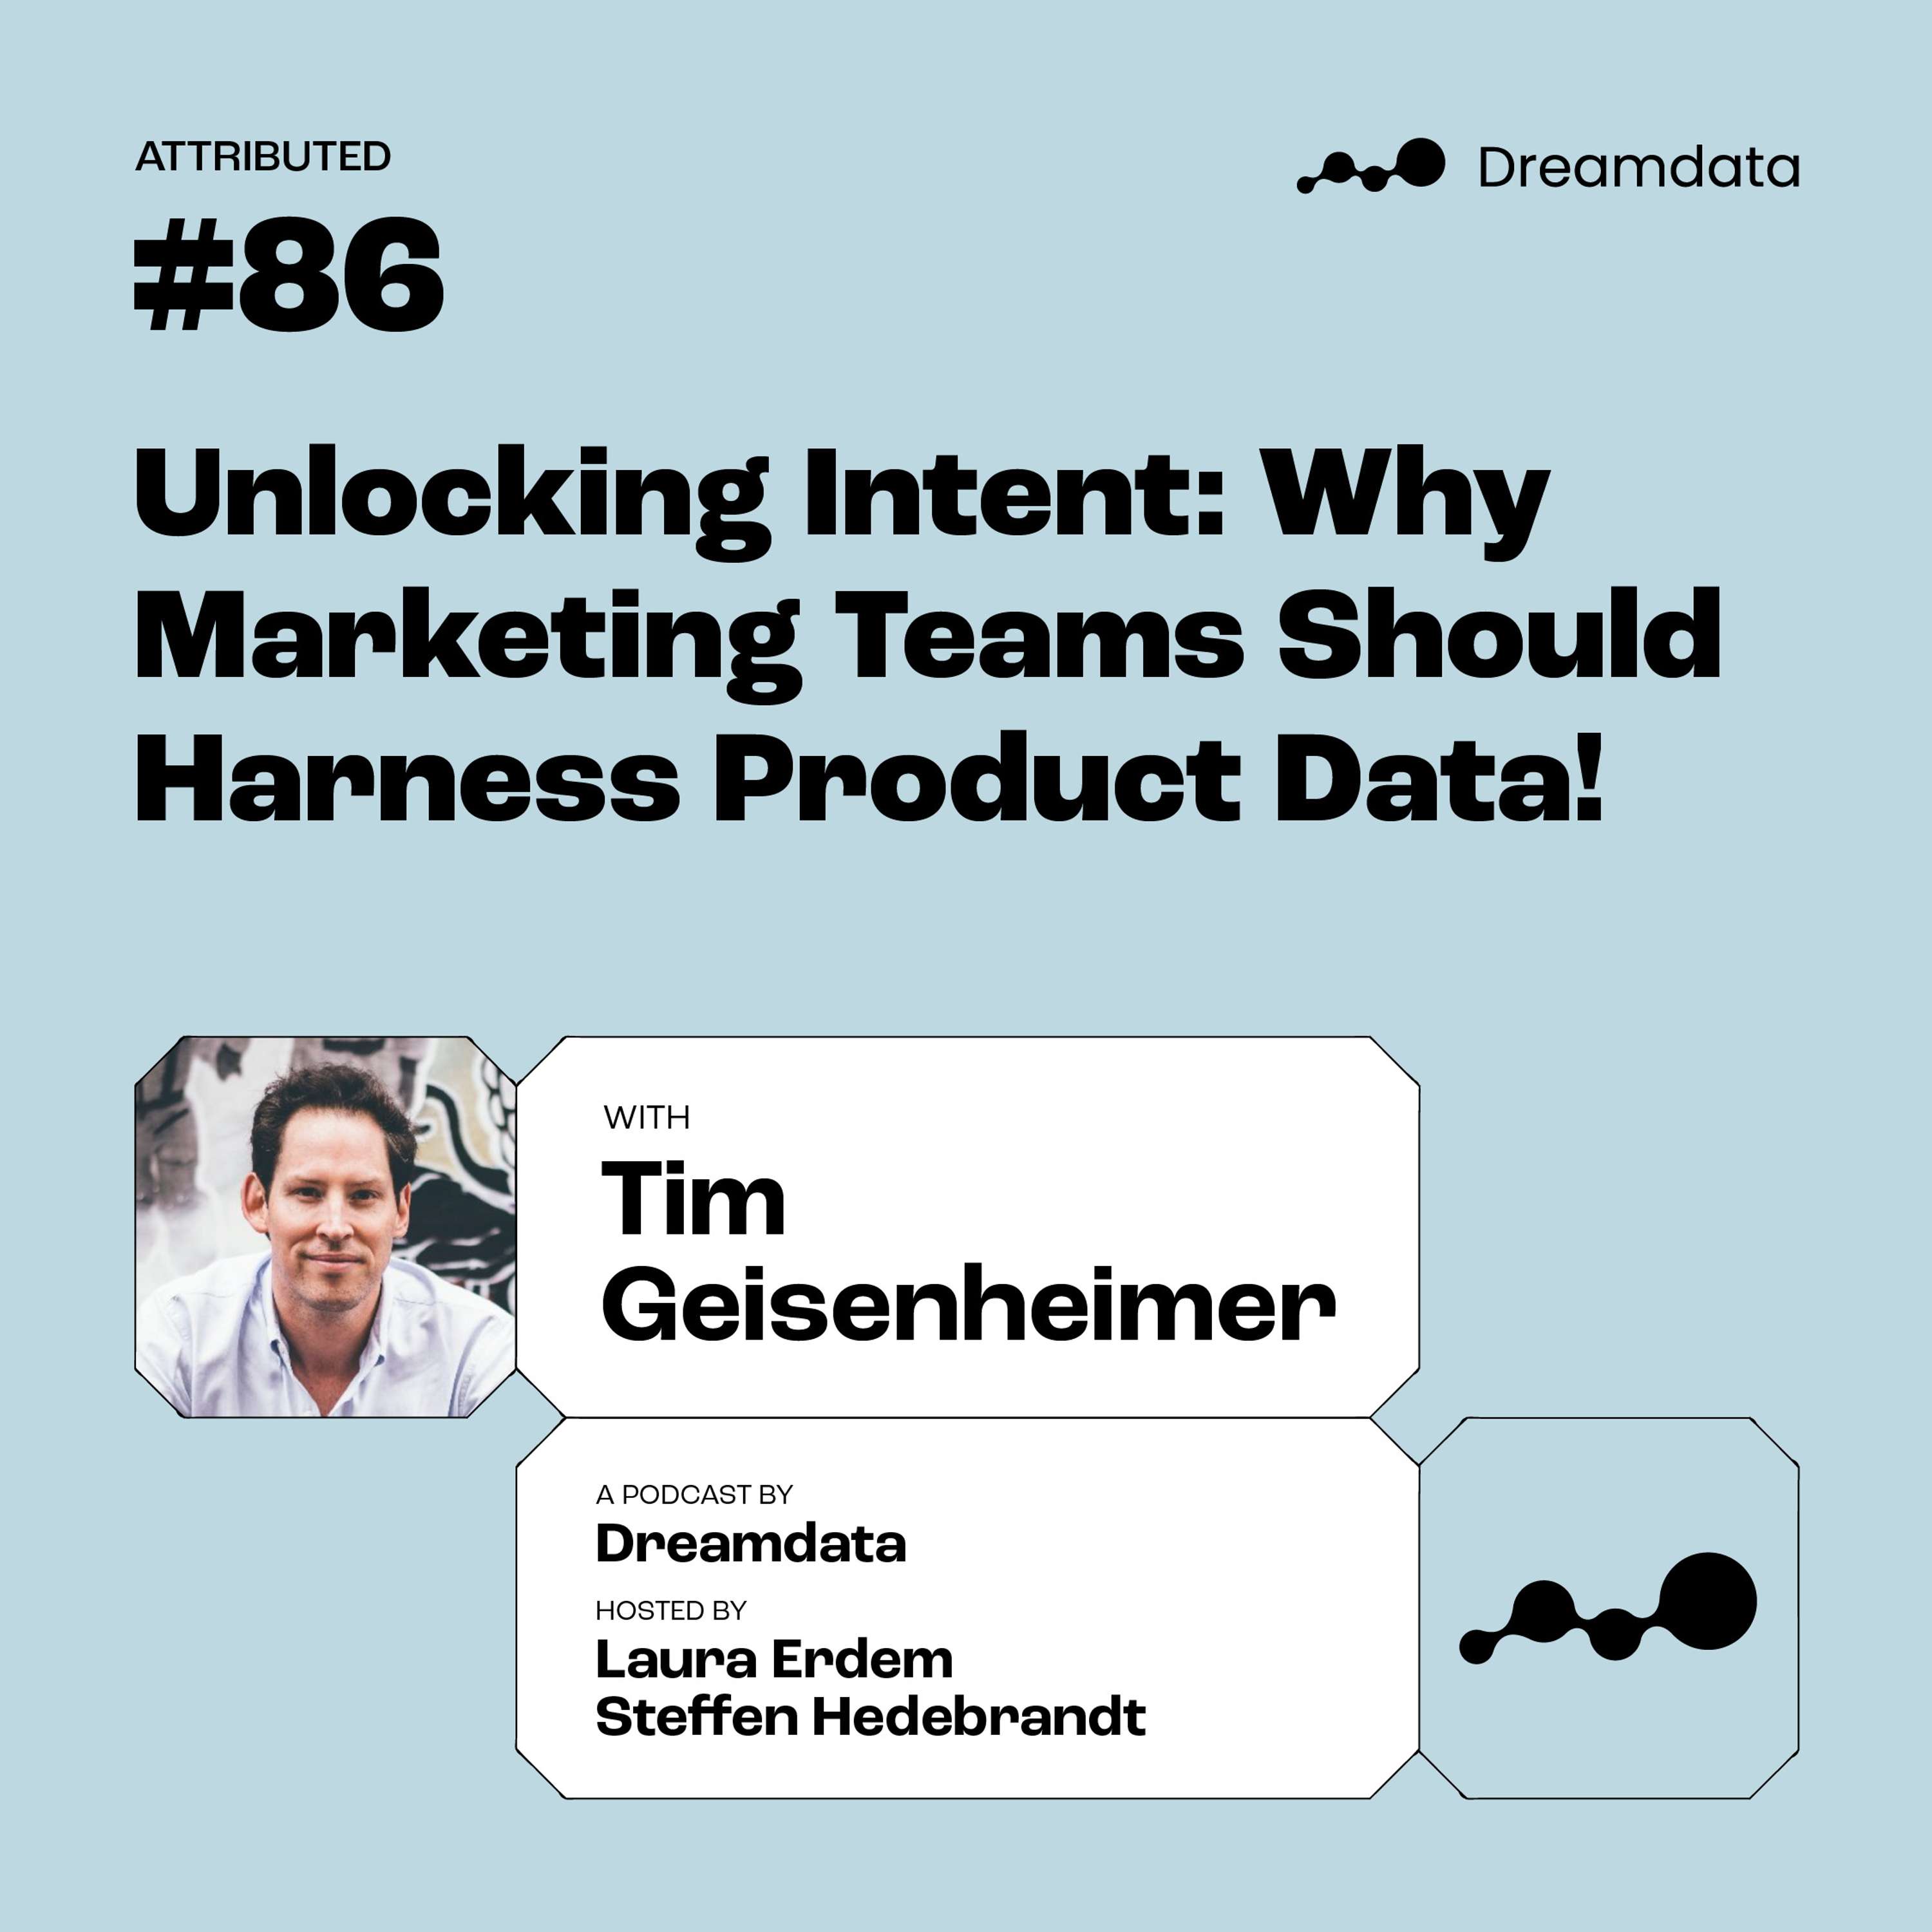 Tim Geisenheimer: Unlocking Intent: Why Marketing Teams Should Harness Product Data!